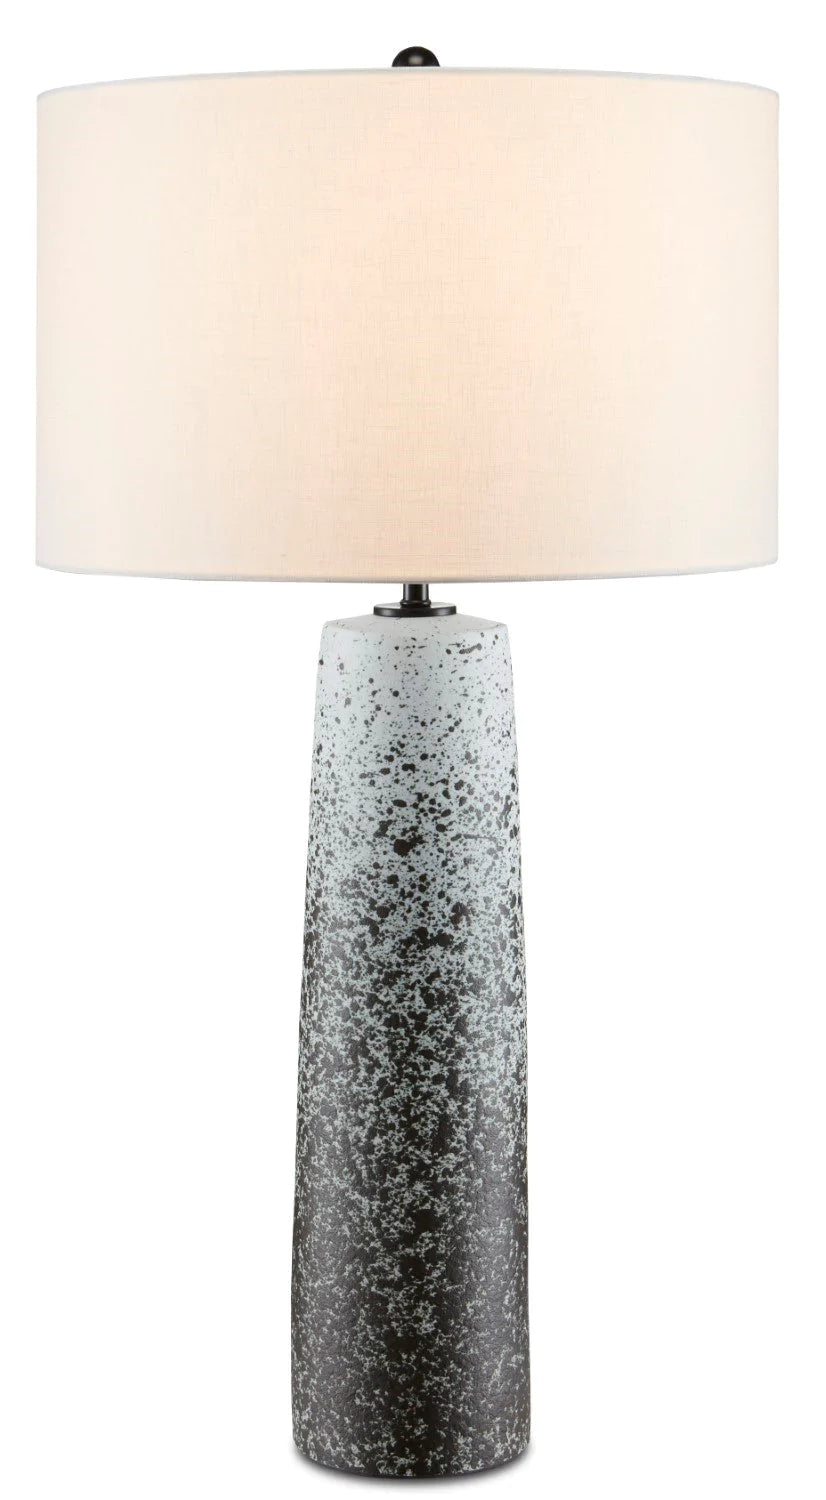 Appaloosa Table Lamp